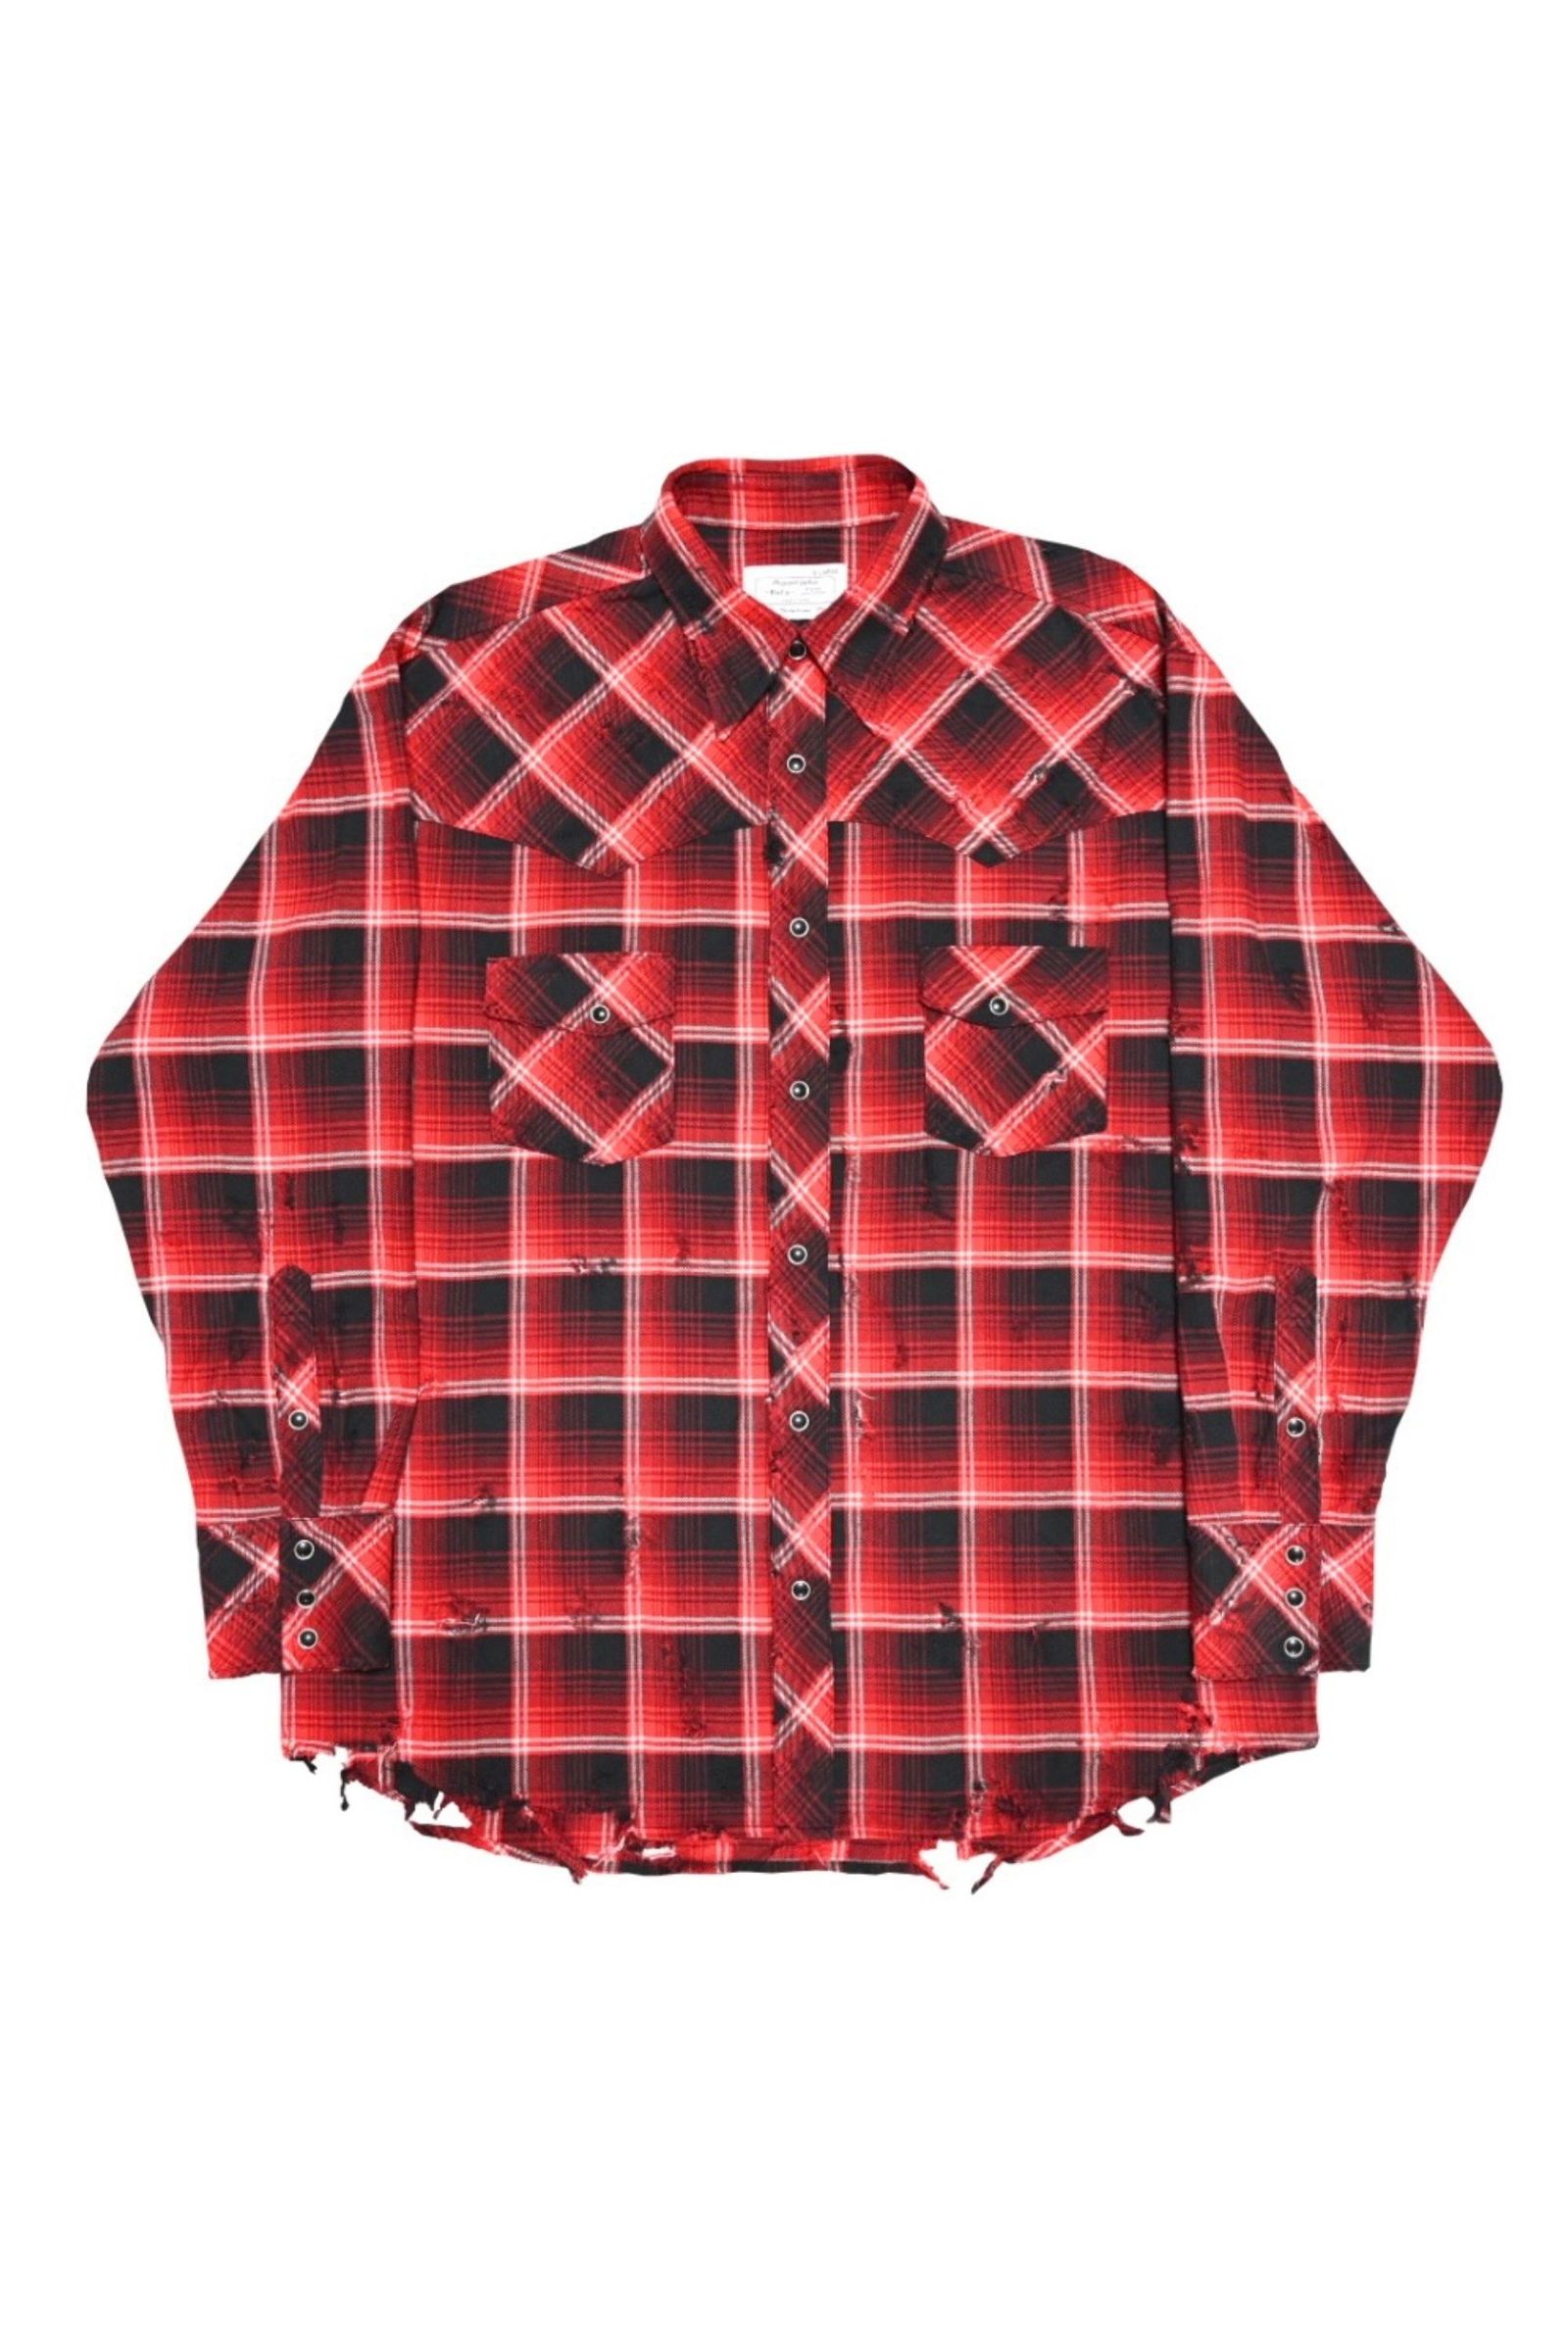 Rafu - Western shirt/RED | NapsNote